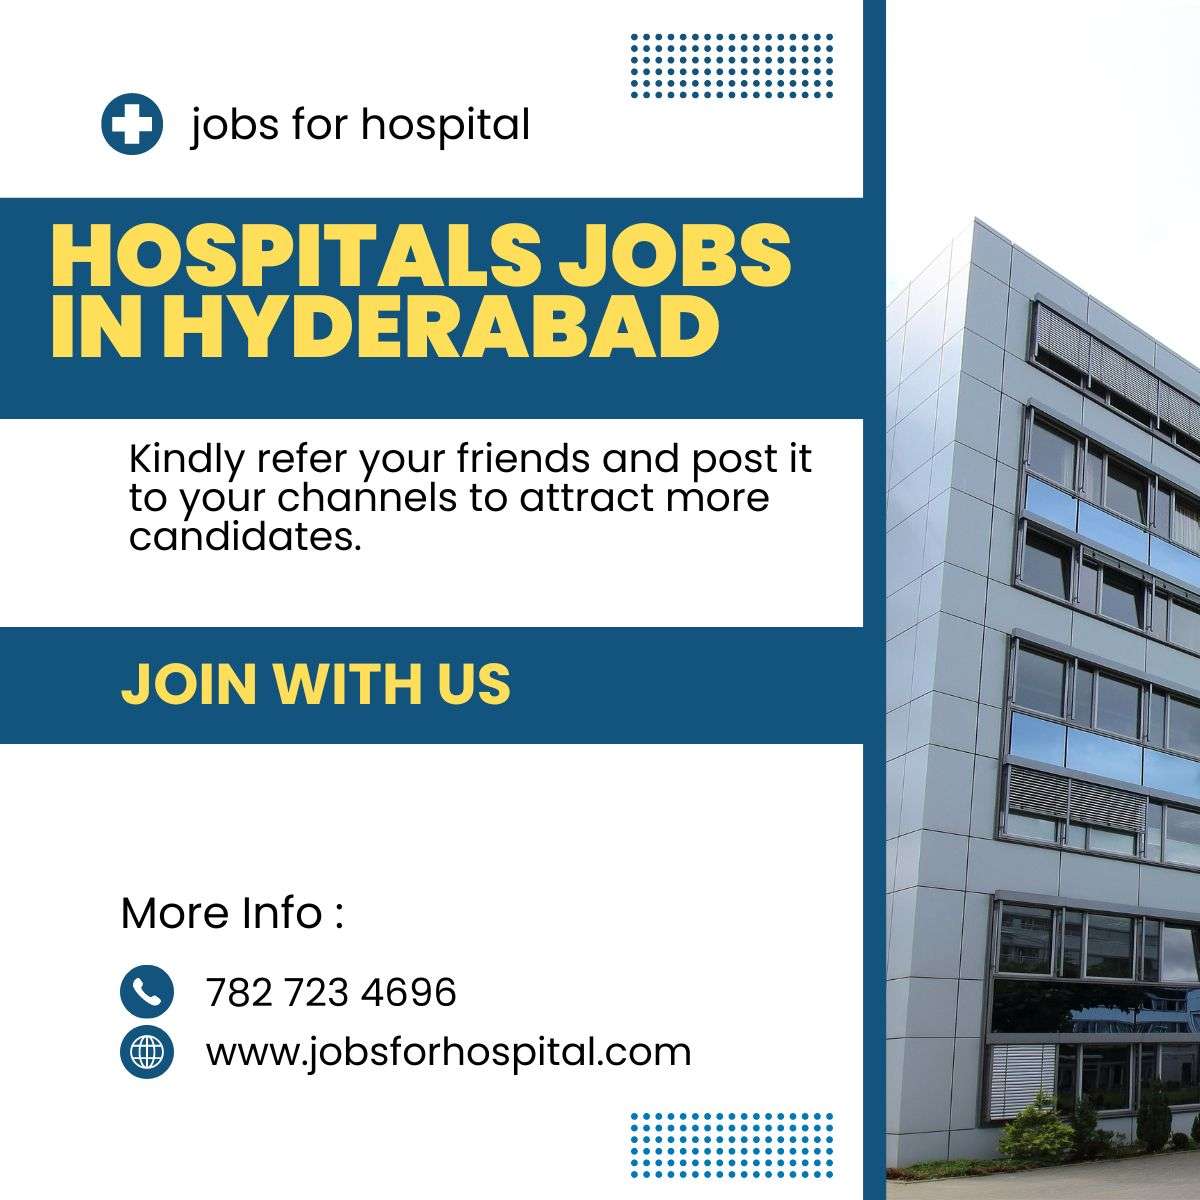 Hospitals Jobs in Hyderabad. jobsforhospital.com